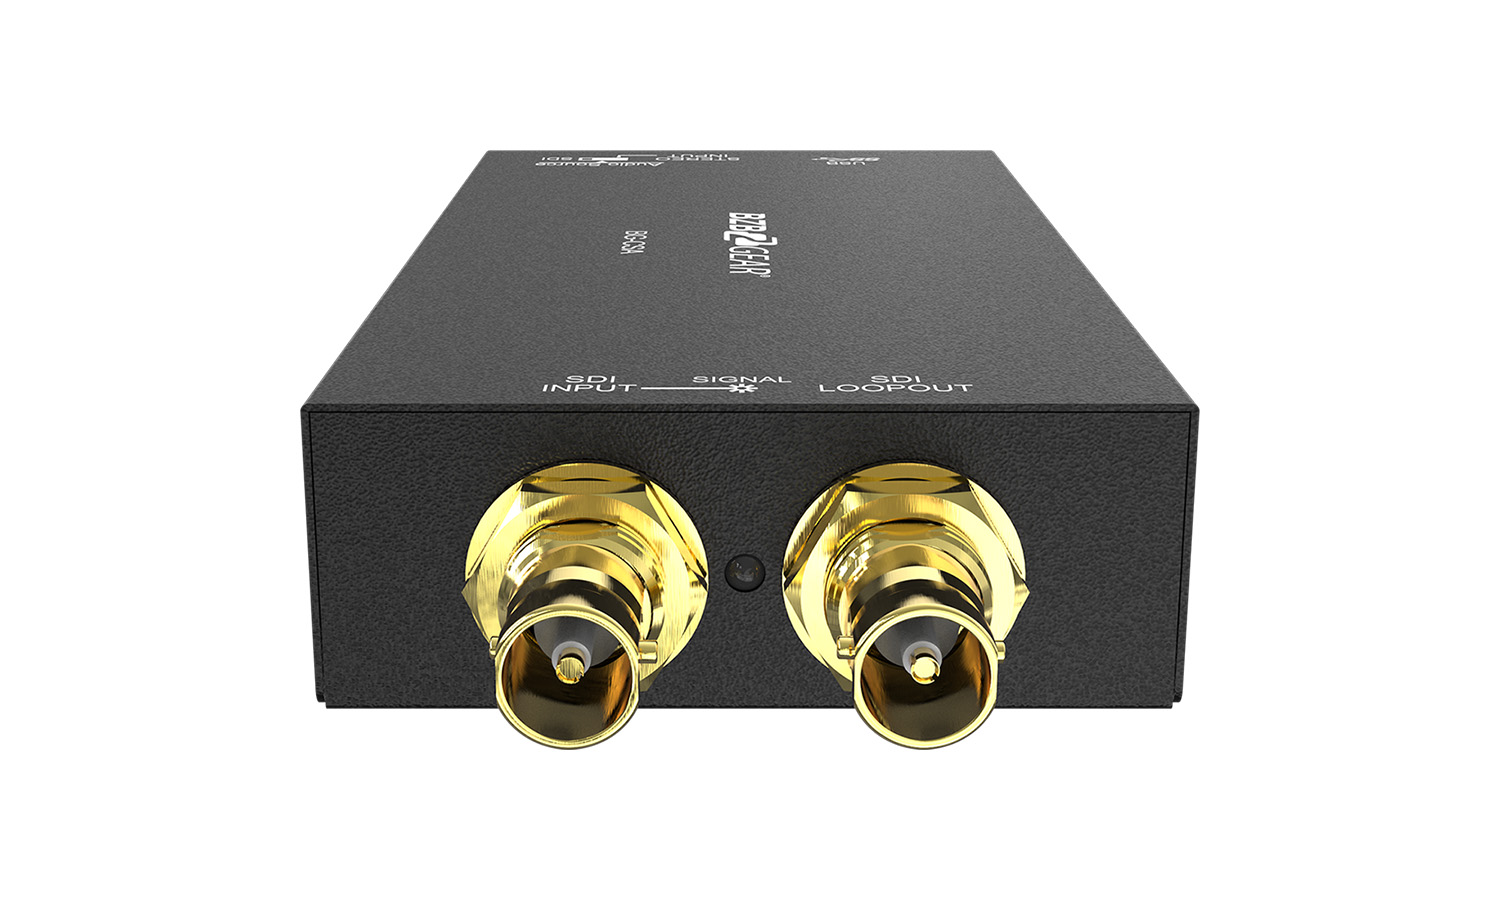 BG-CSA USB 3.1 1080P FHD 3G-SDI Capture Device with Scaler and Audio by BZBGEAR